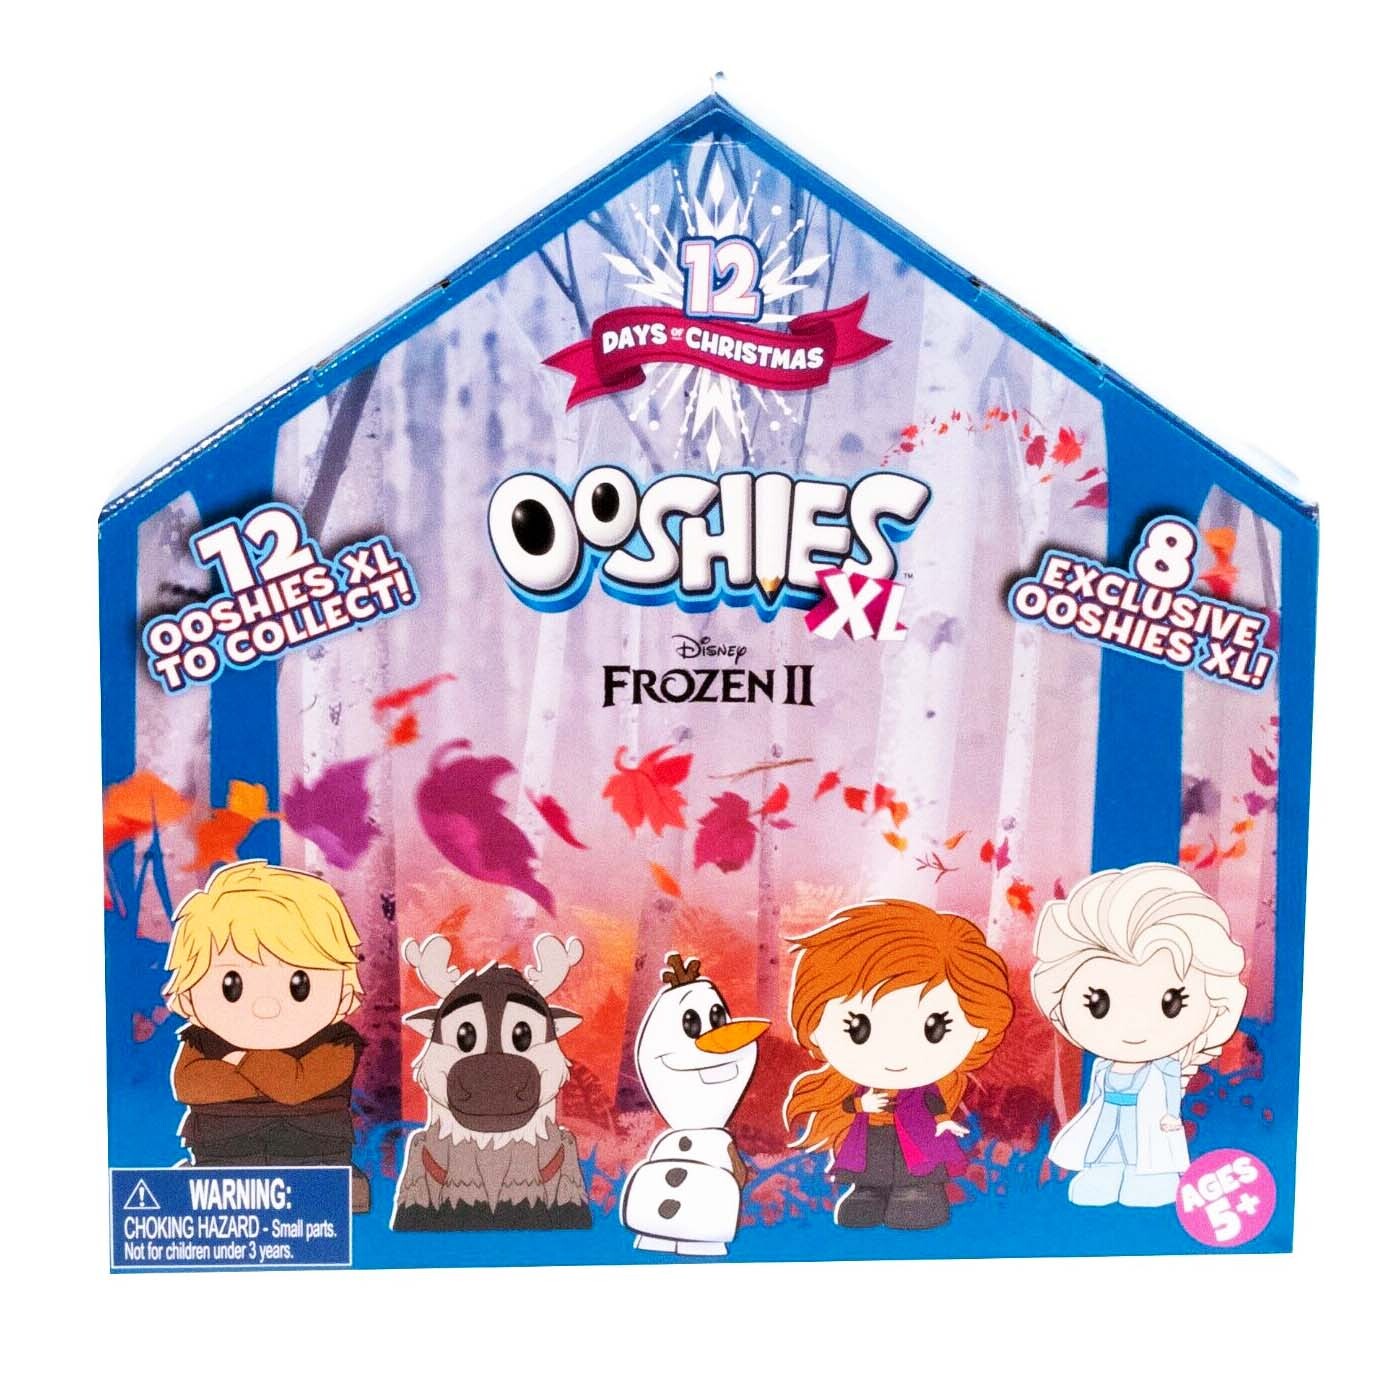 Ooshies XL 12 Days Of Christmas Advent Calendar - Disney Frozen 2